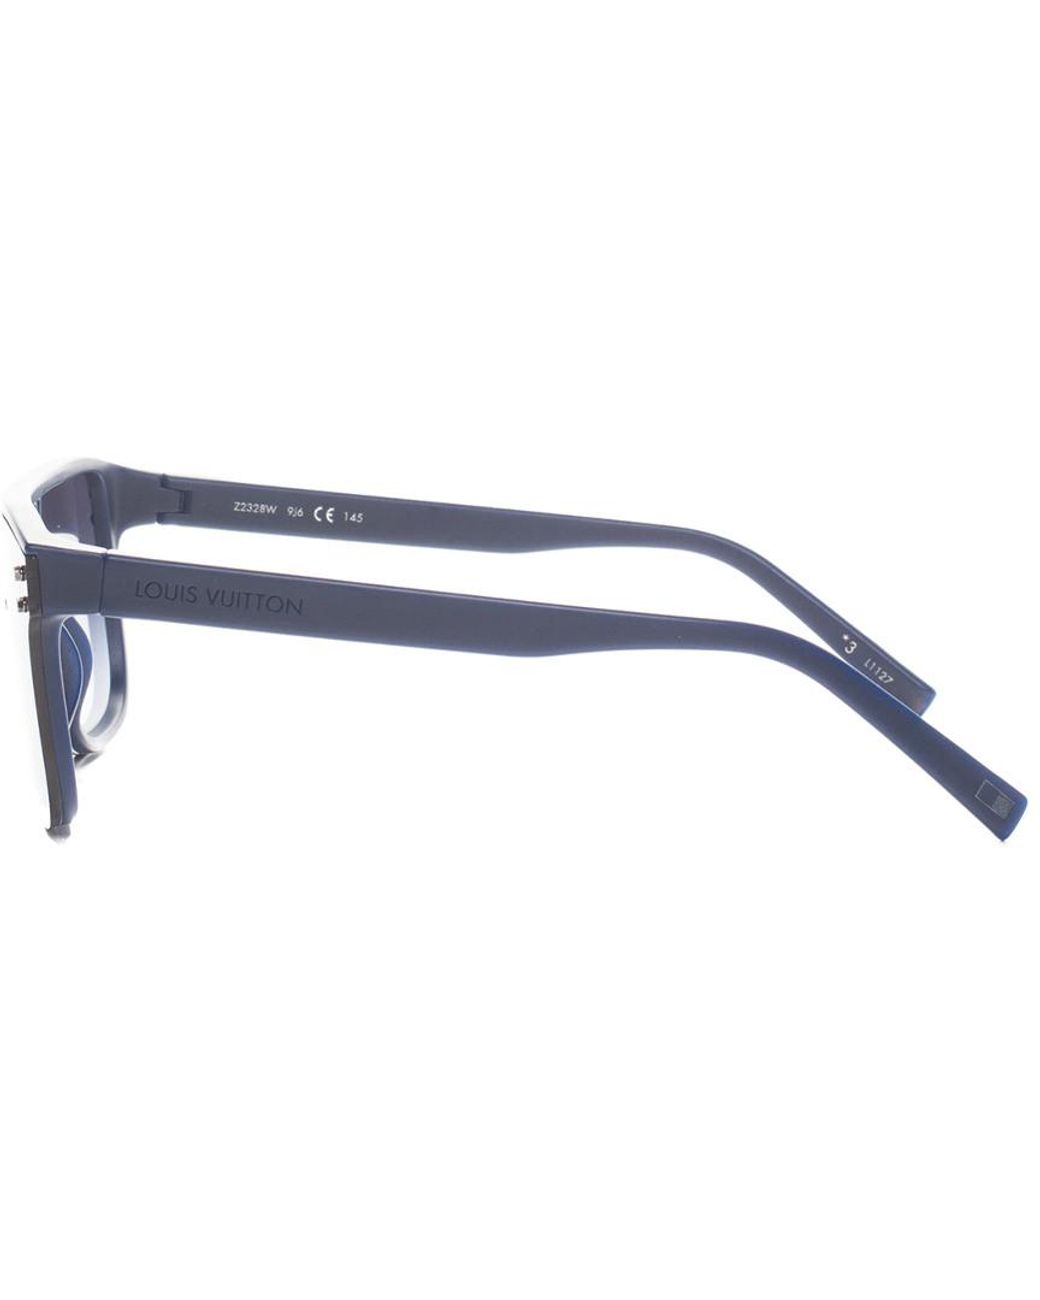 Louis Vuitton LV Waimea Square Sunglasses Blue Plastic. Size E